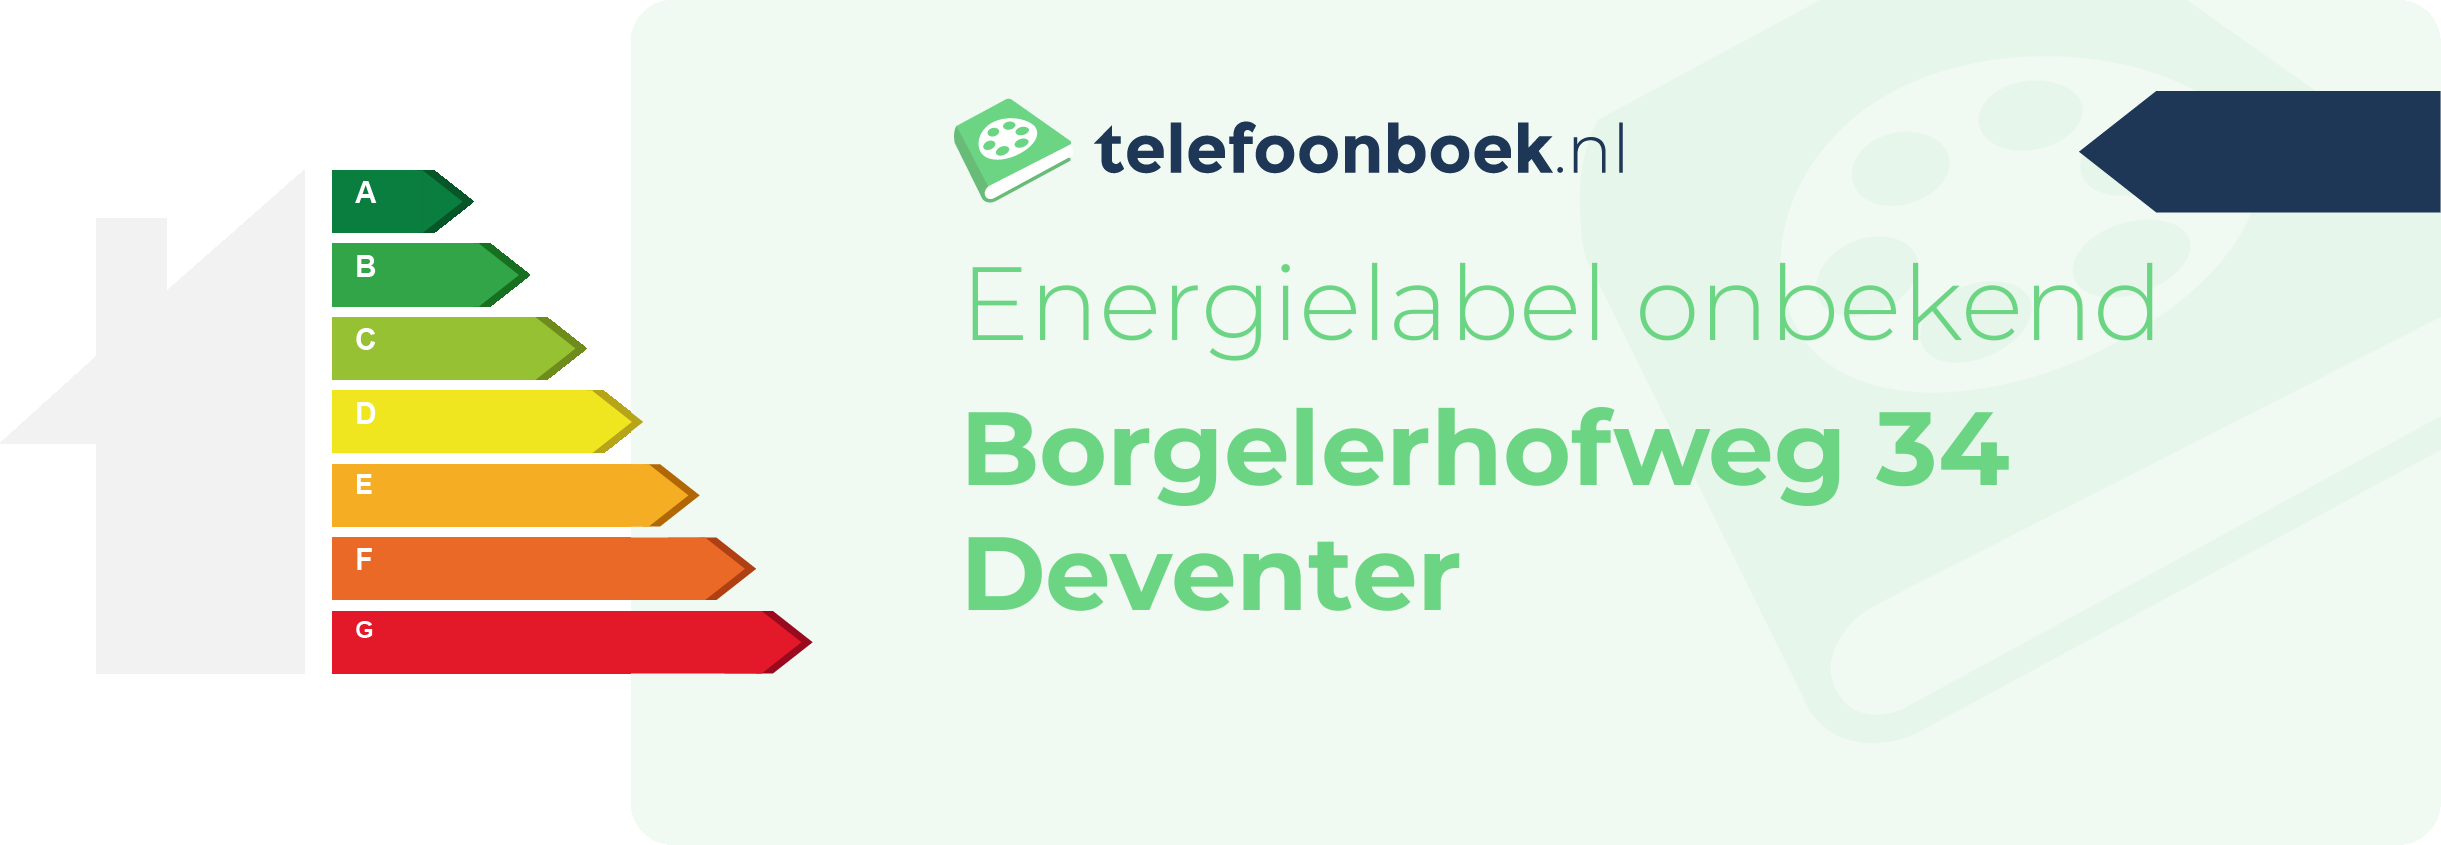 Energielabel Borgelerhofweg 34 Deventer